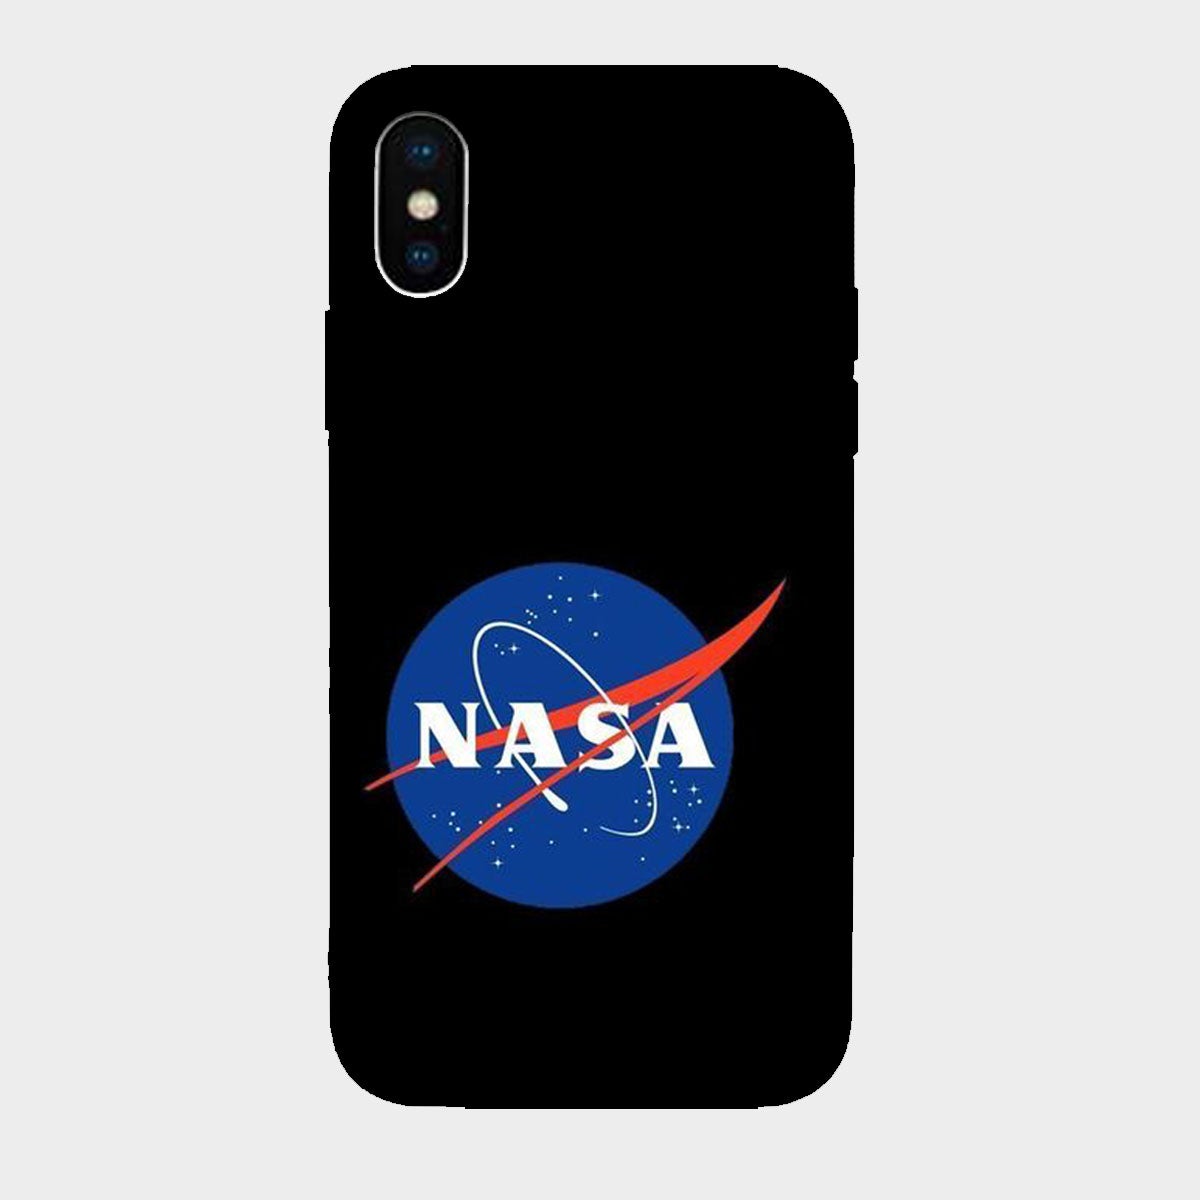 Nasa - Mobile Phone Cover - Hard Case